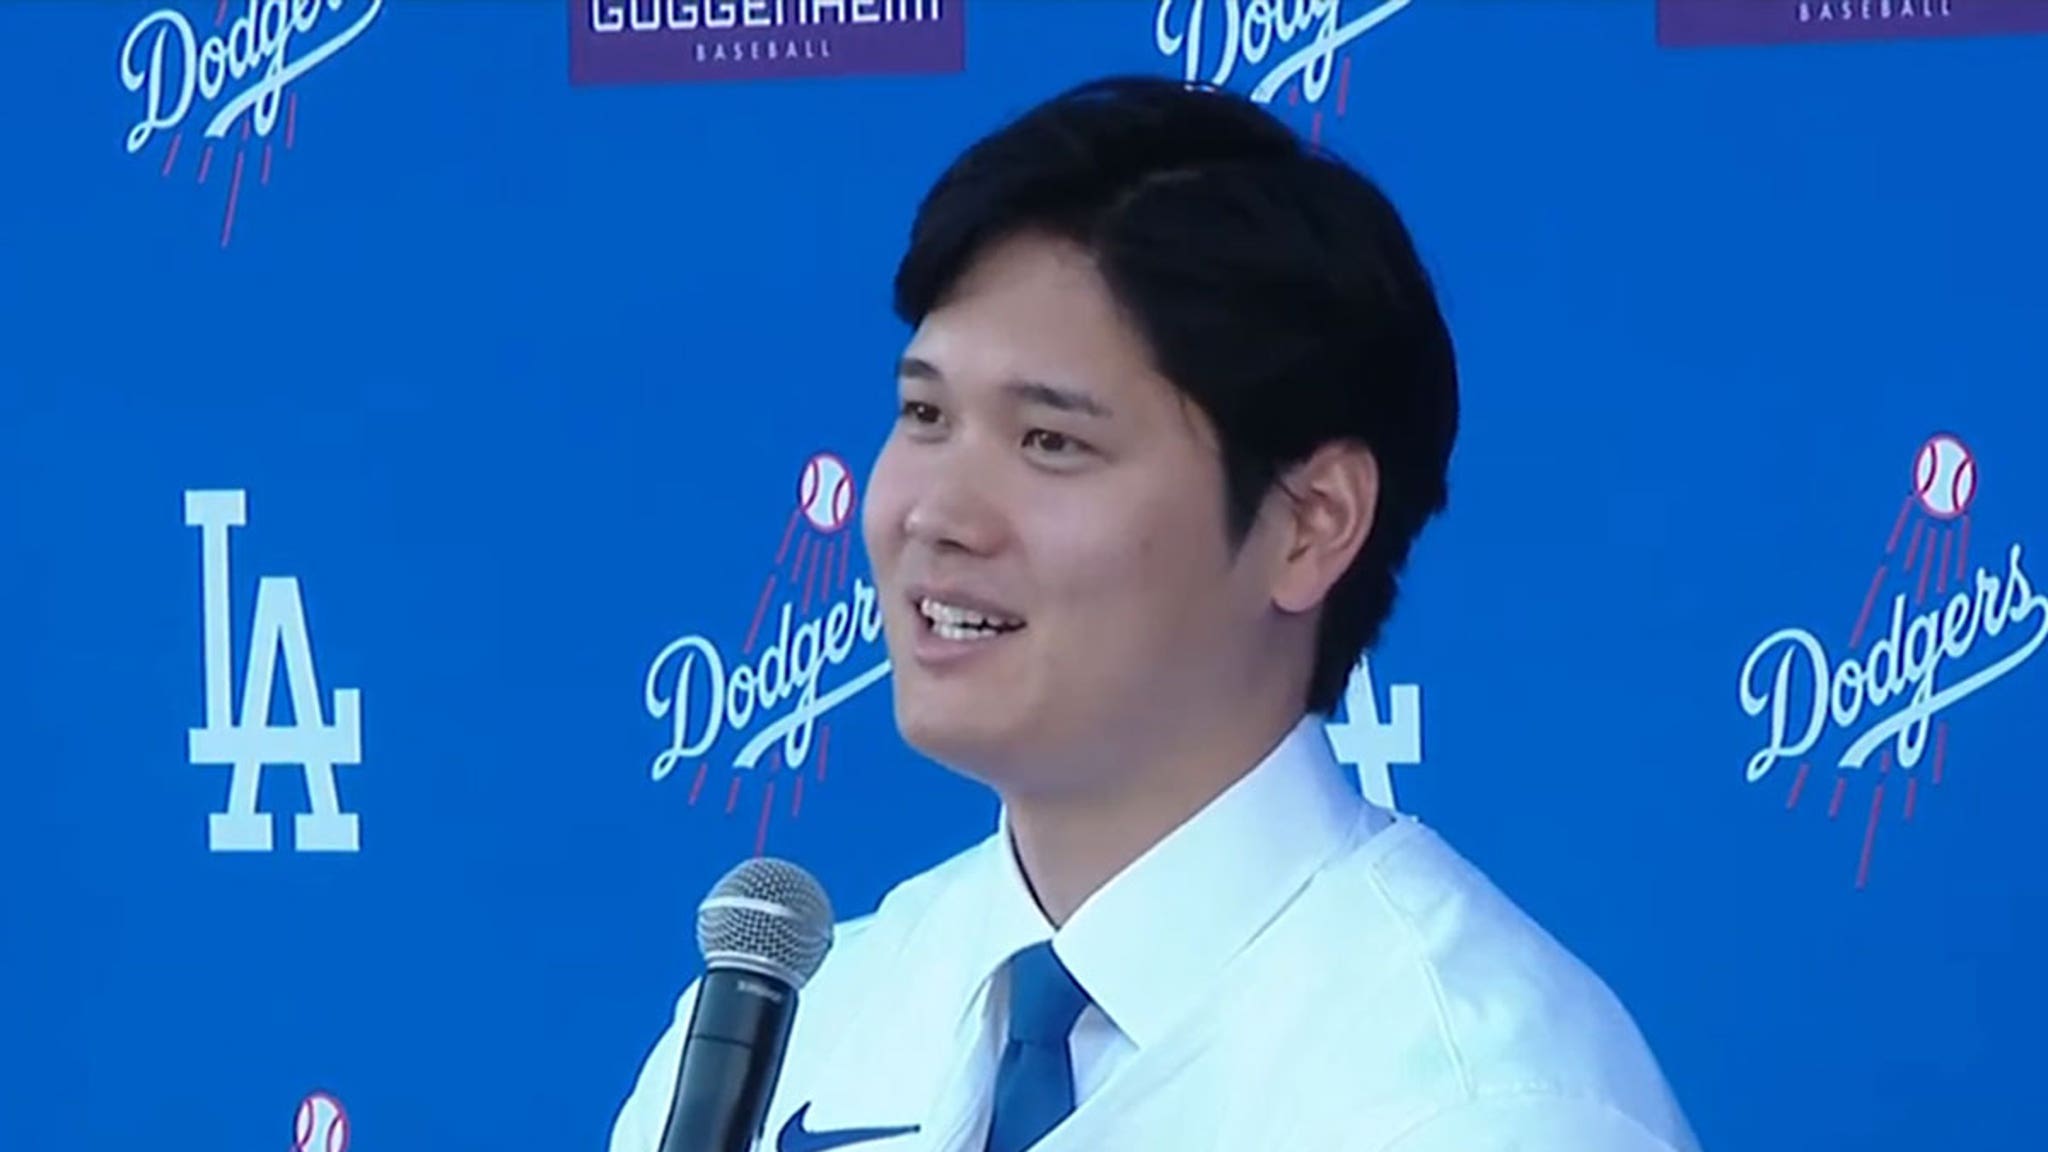 ¡Shohei Ohtani finalmente revela el nombre del perro, no el de los Dodgers!